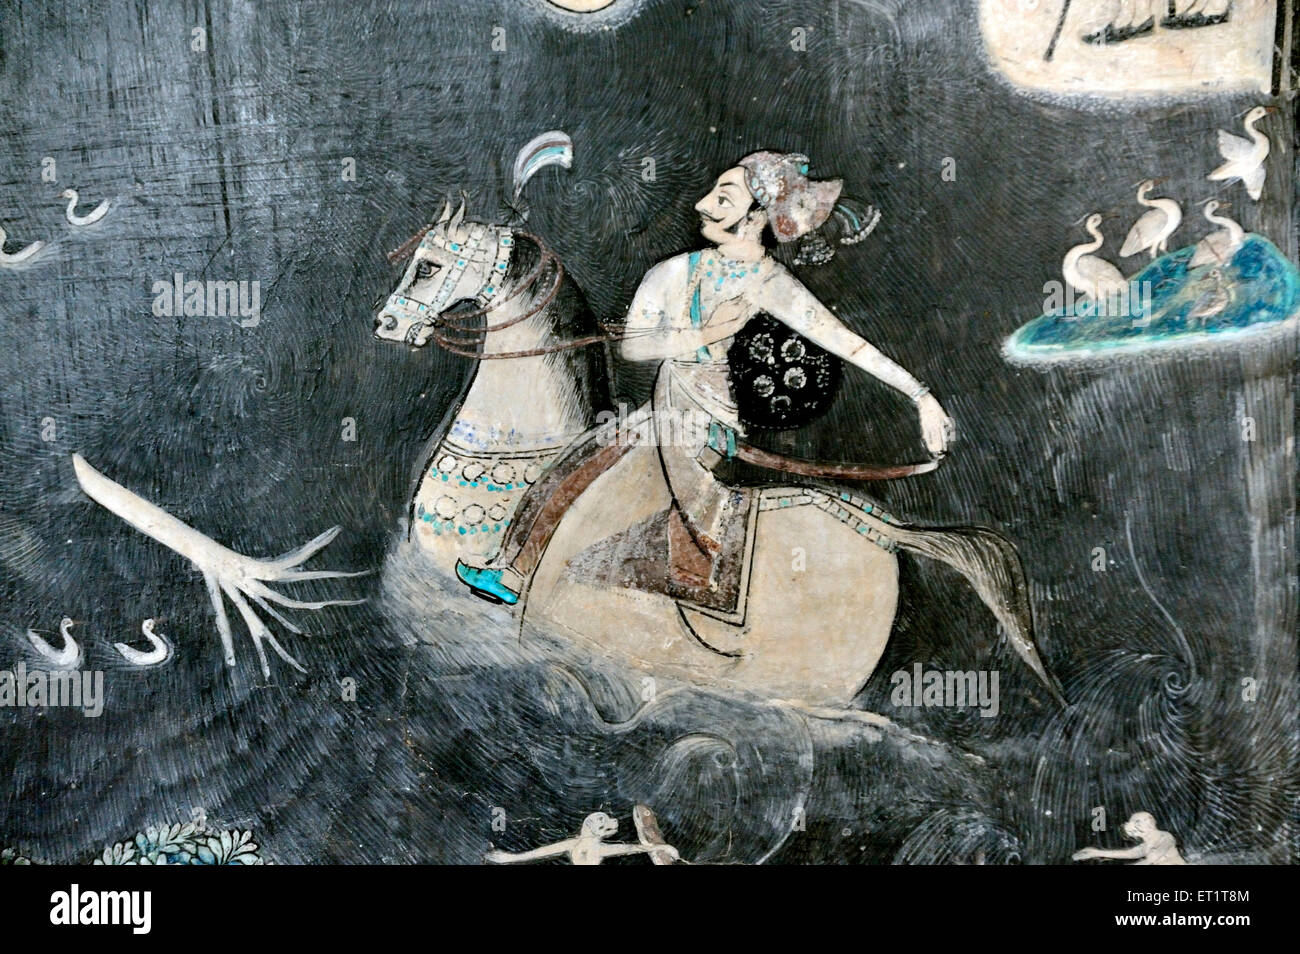 La peinture murale king crossing river sur cheval dans chitrasala umaid mahal bundi rajasthan Inde Asie Banque D'Images